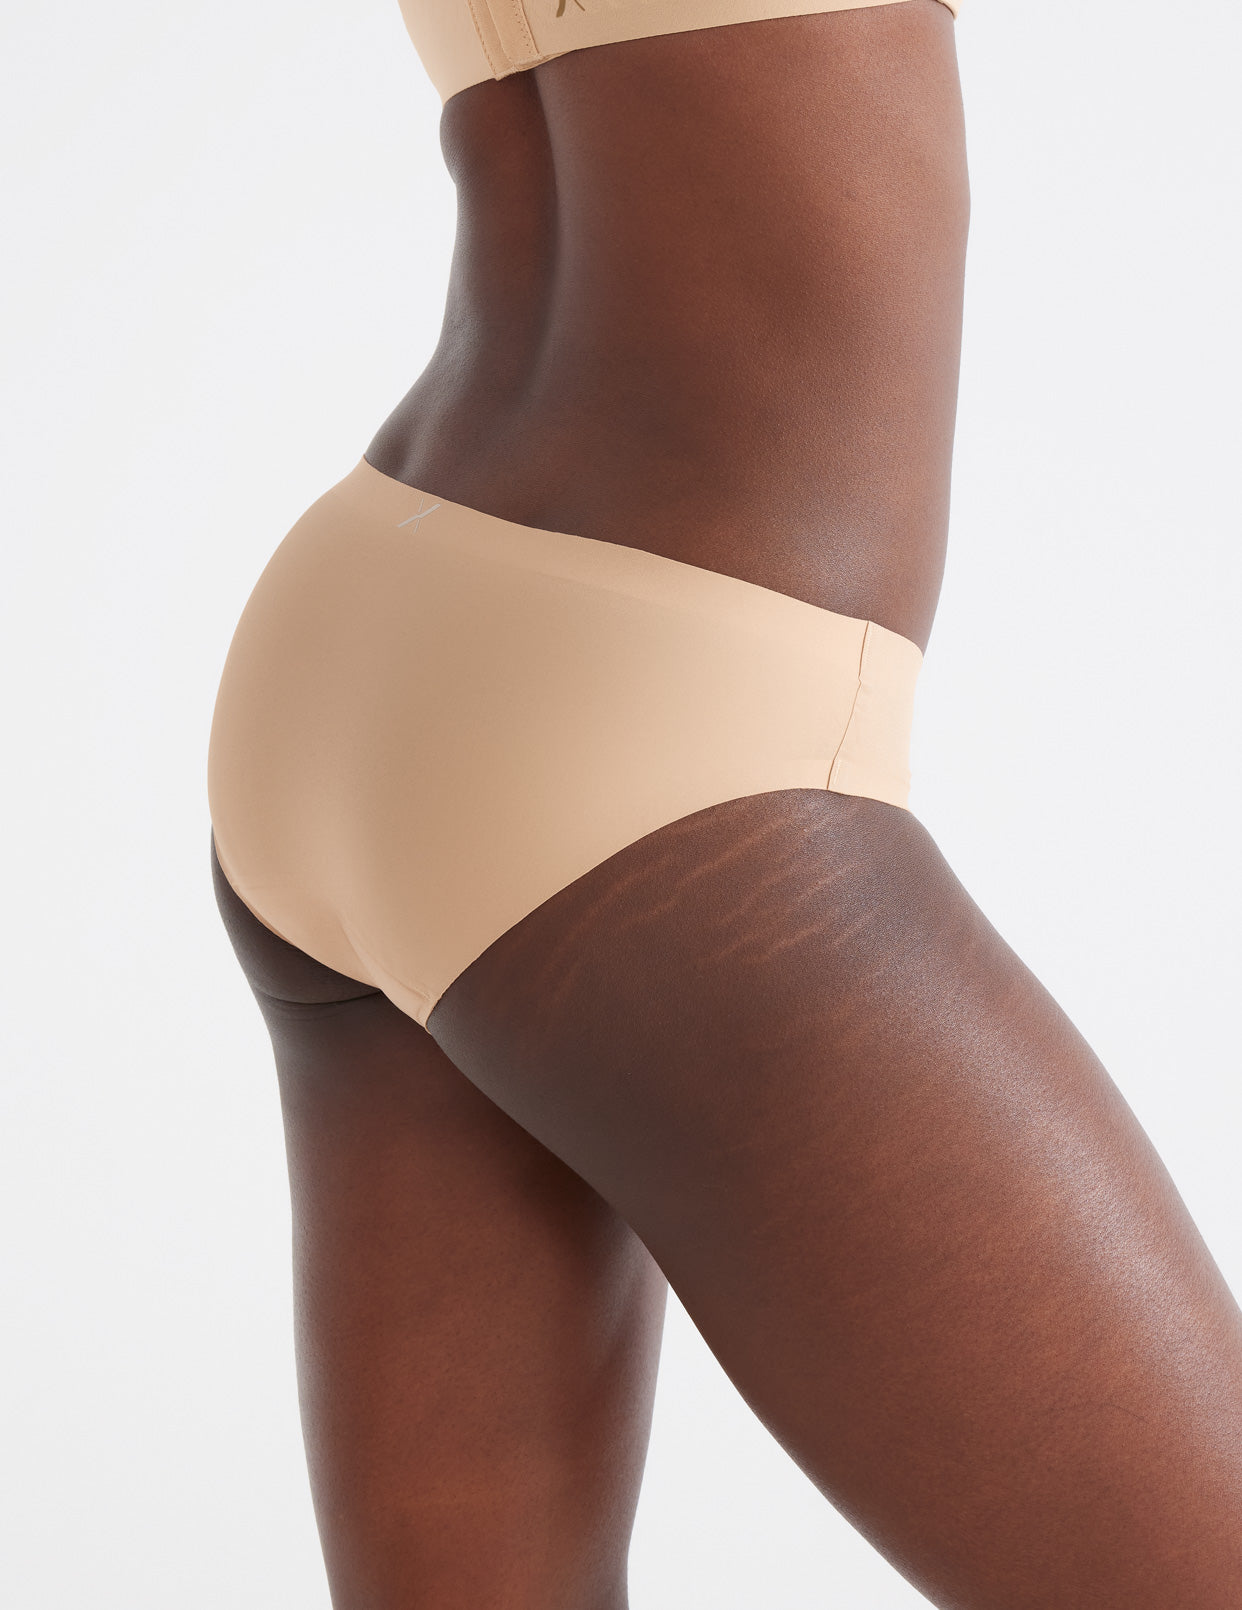  KNIX Super Leakproof Bikini - Period Underwear for Women -  Black, X-Small (1 Pack) : Health & Household